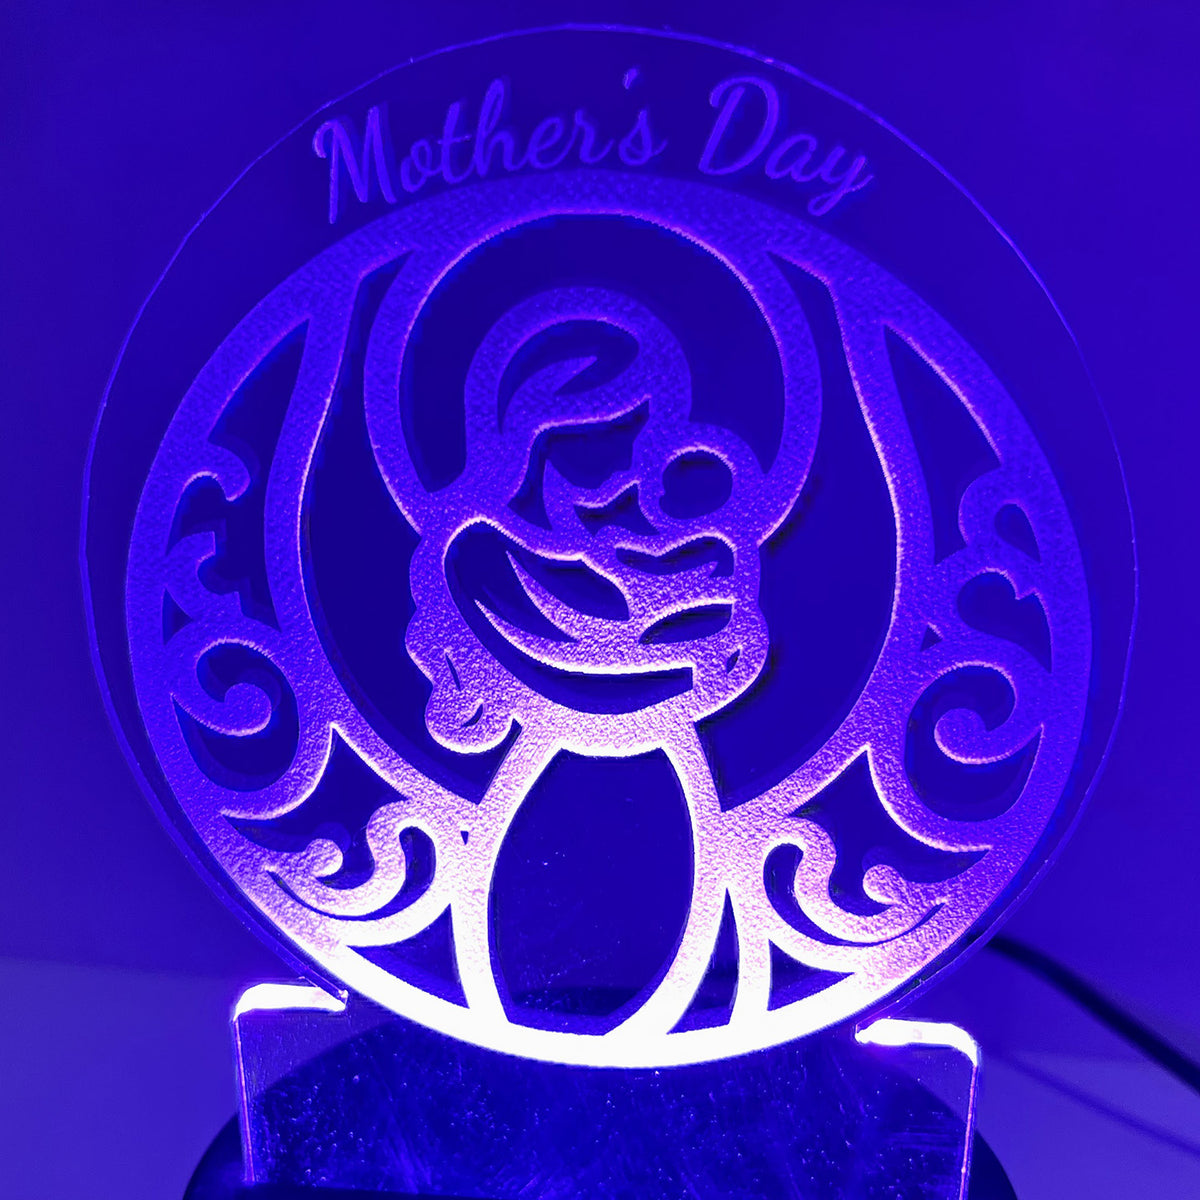 Mother's Day "Mom & Child" LED Nightlight